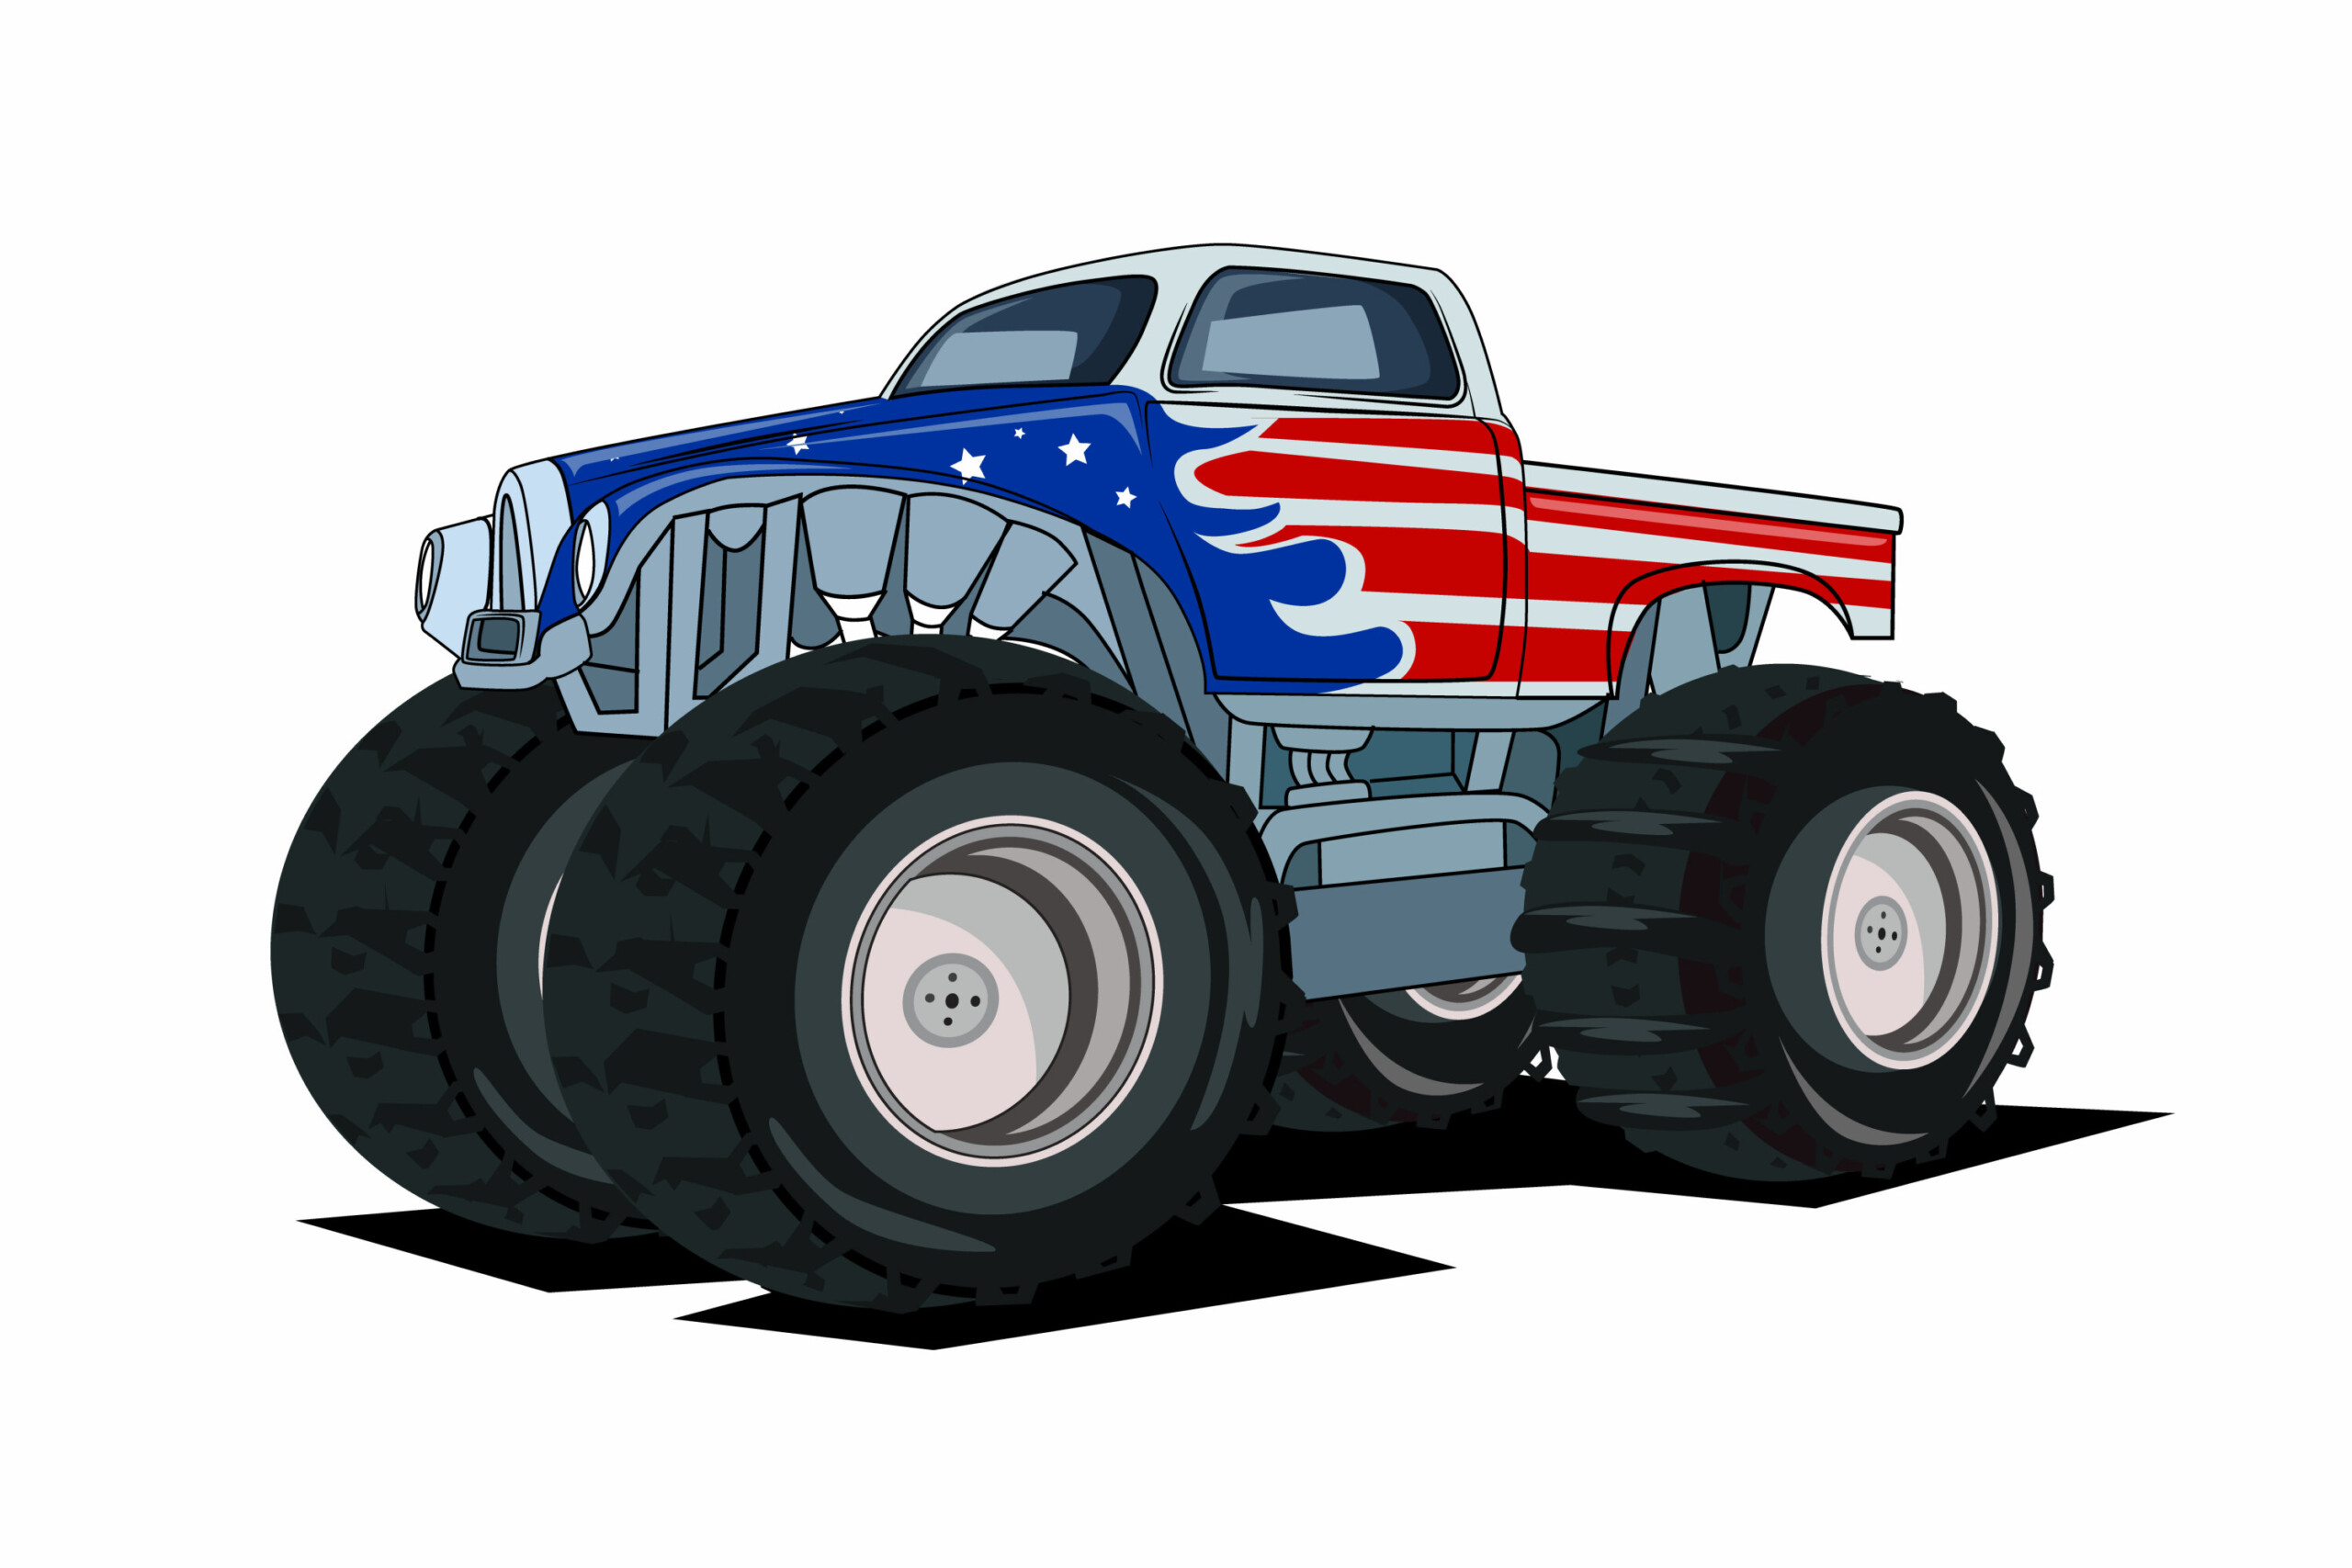 Big Monster Truck With USA Flag - Original image